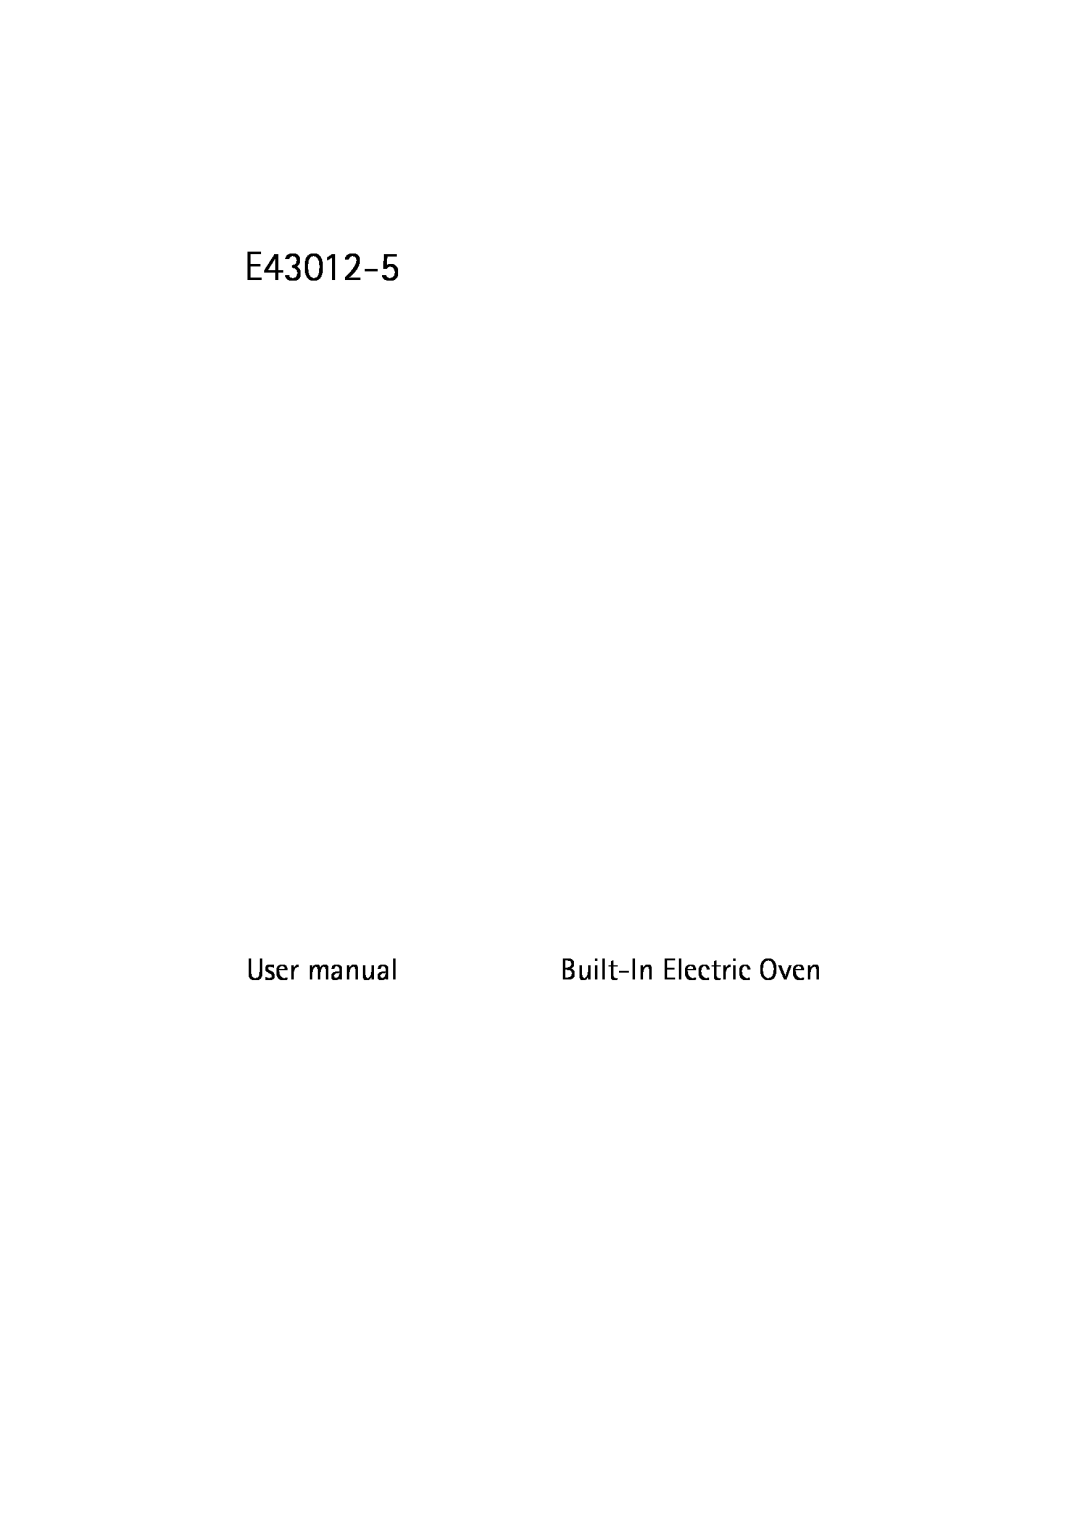 Electrolux E43012-5 user manual User manual 